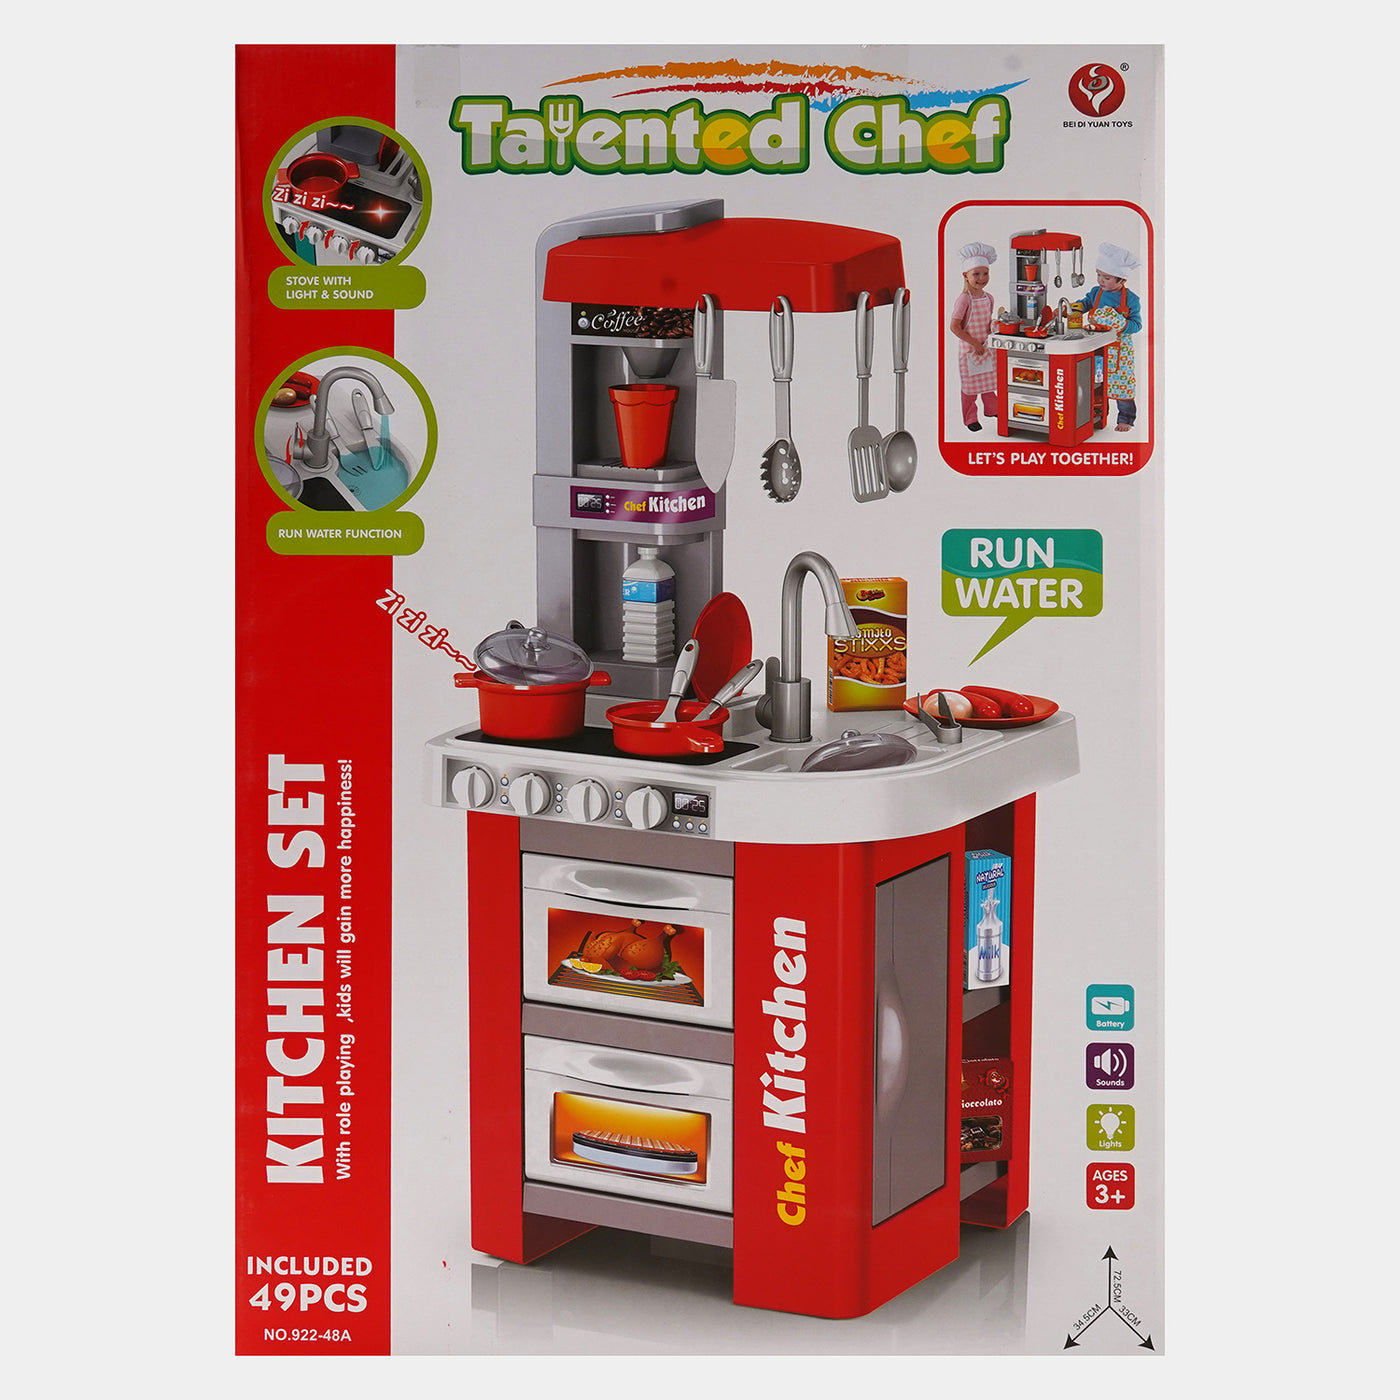 Talented Large Chef Kitchen Set Toy | 49PCs